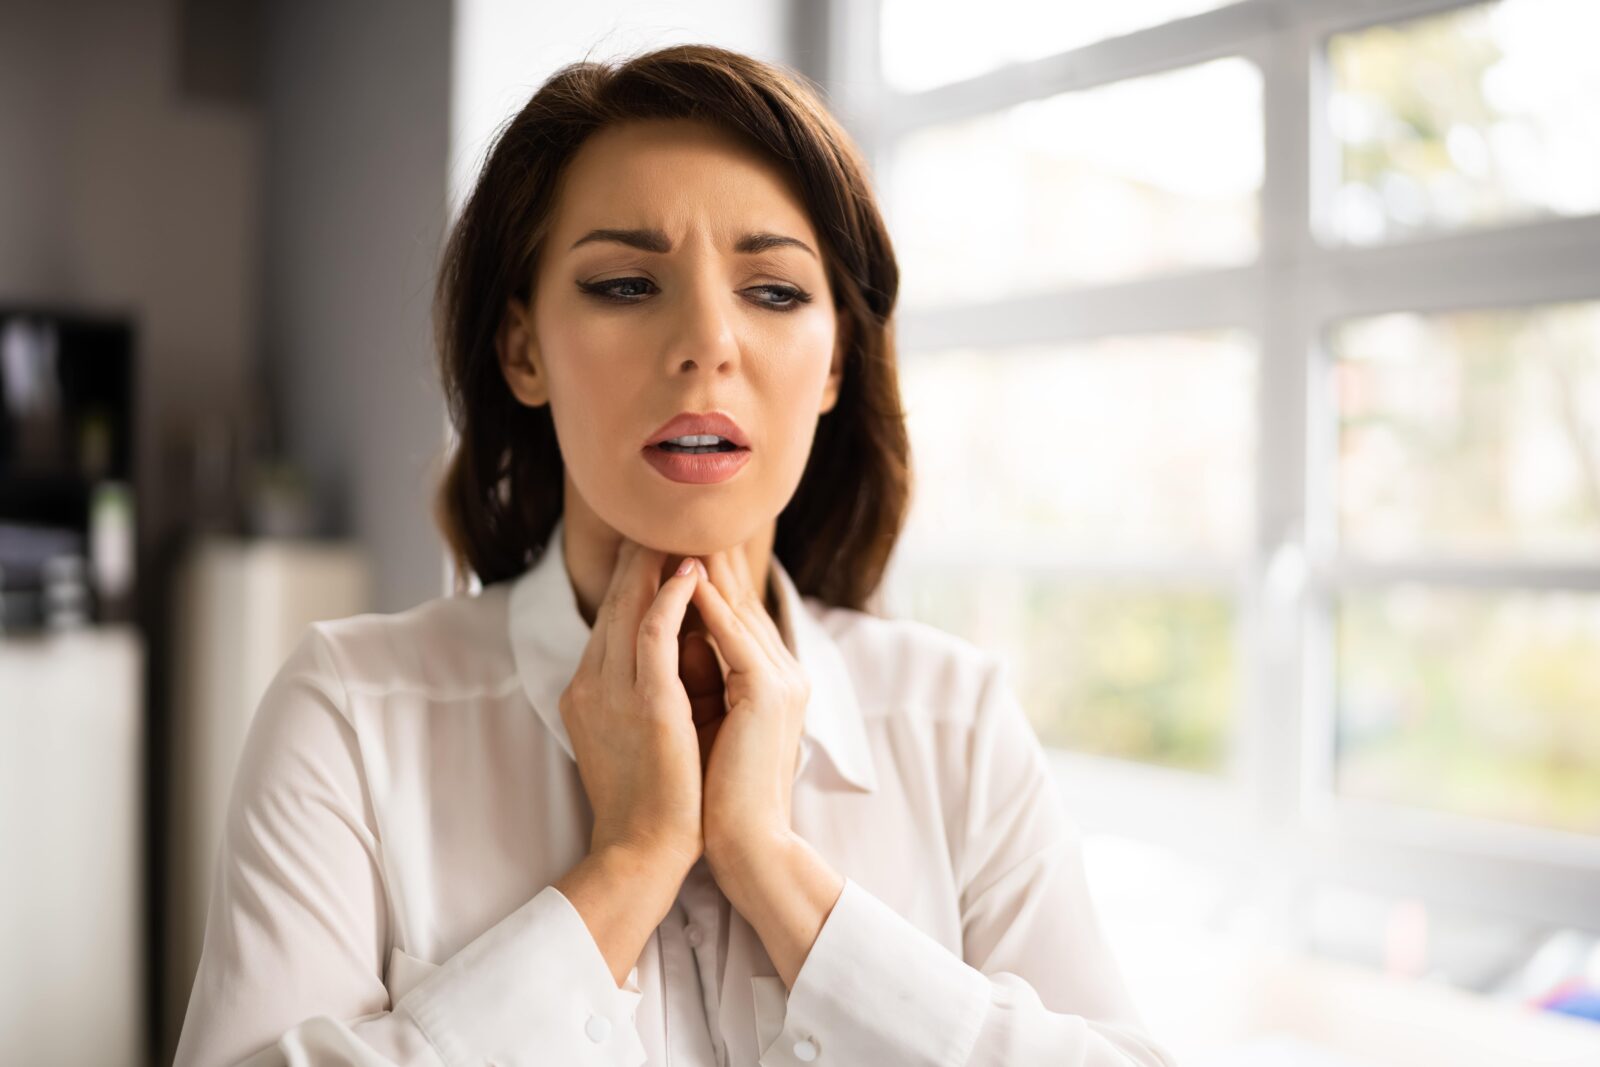 Neck And Throat Pain From Laryngitis Disease